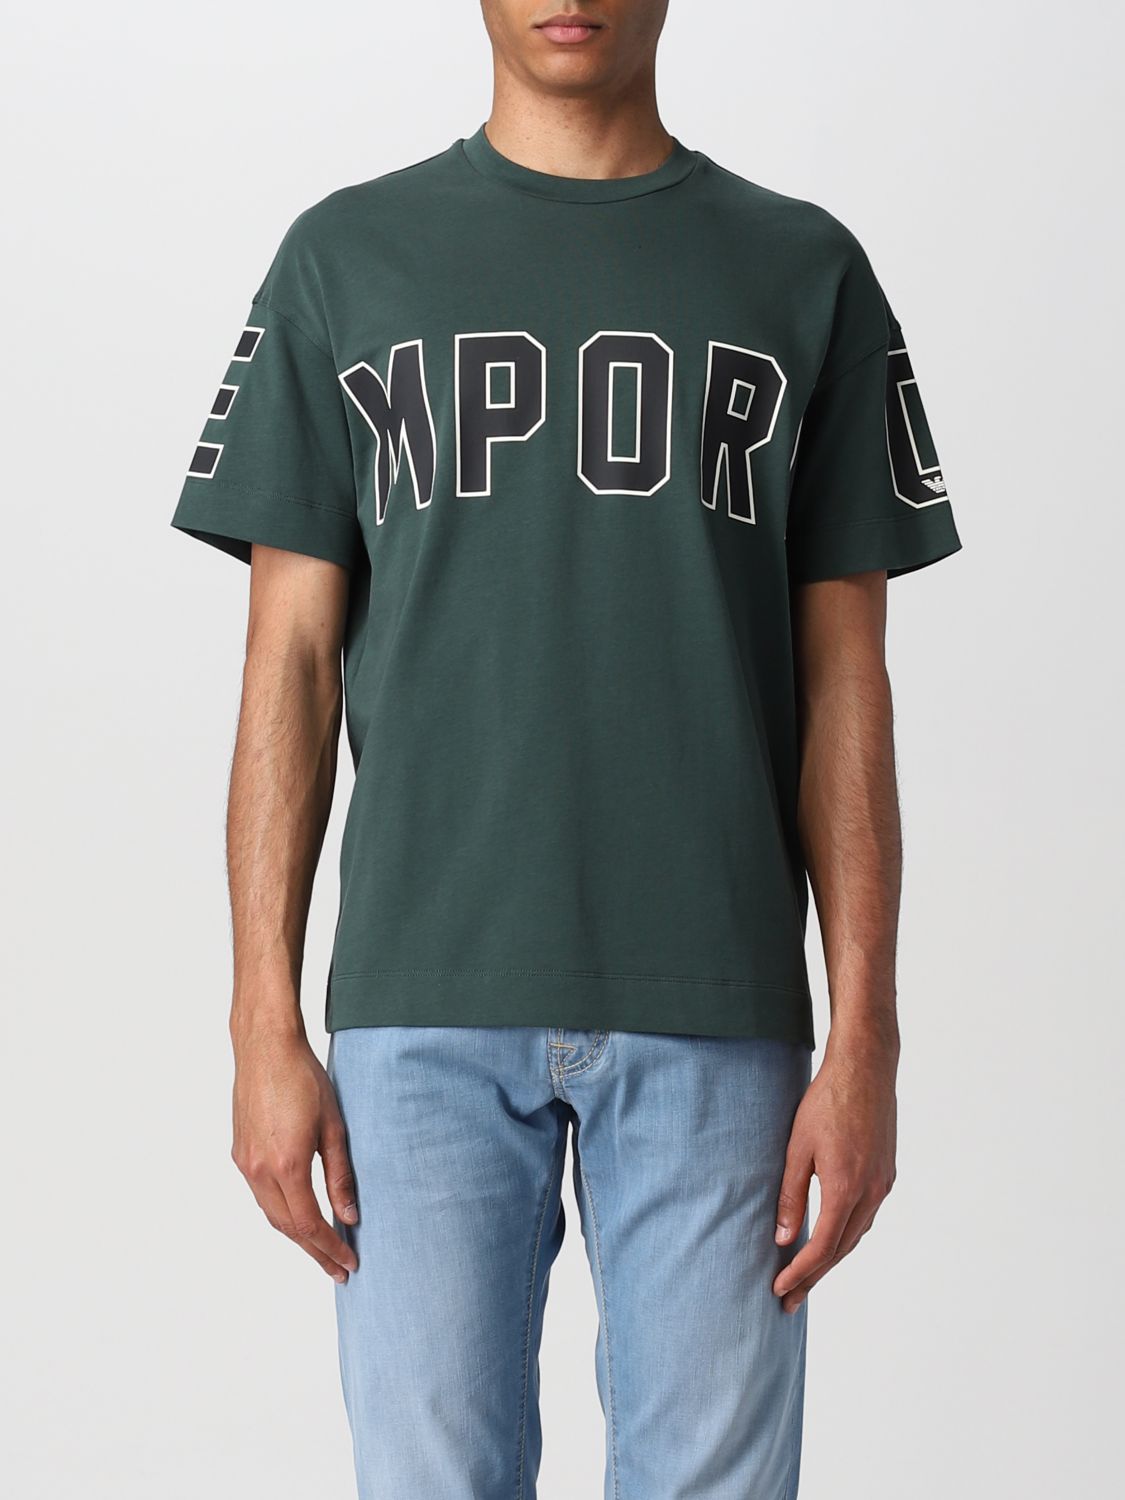 EMPORIO ARMANI: T-shirt with logo - Green | Emporio Armani t-shirt ...